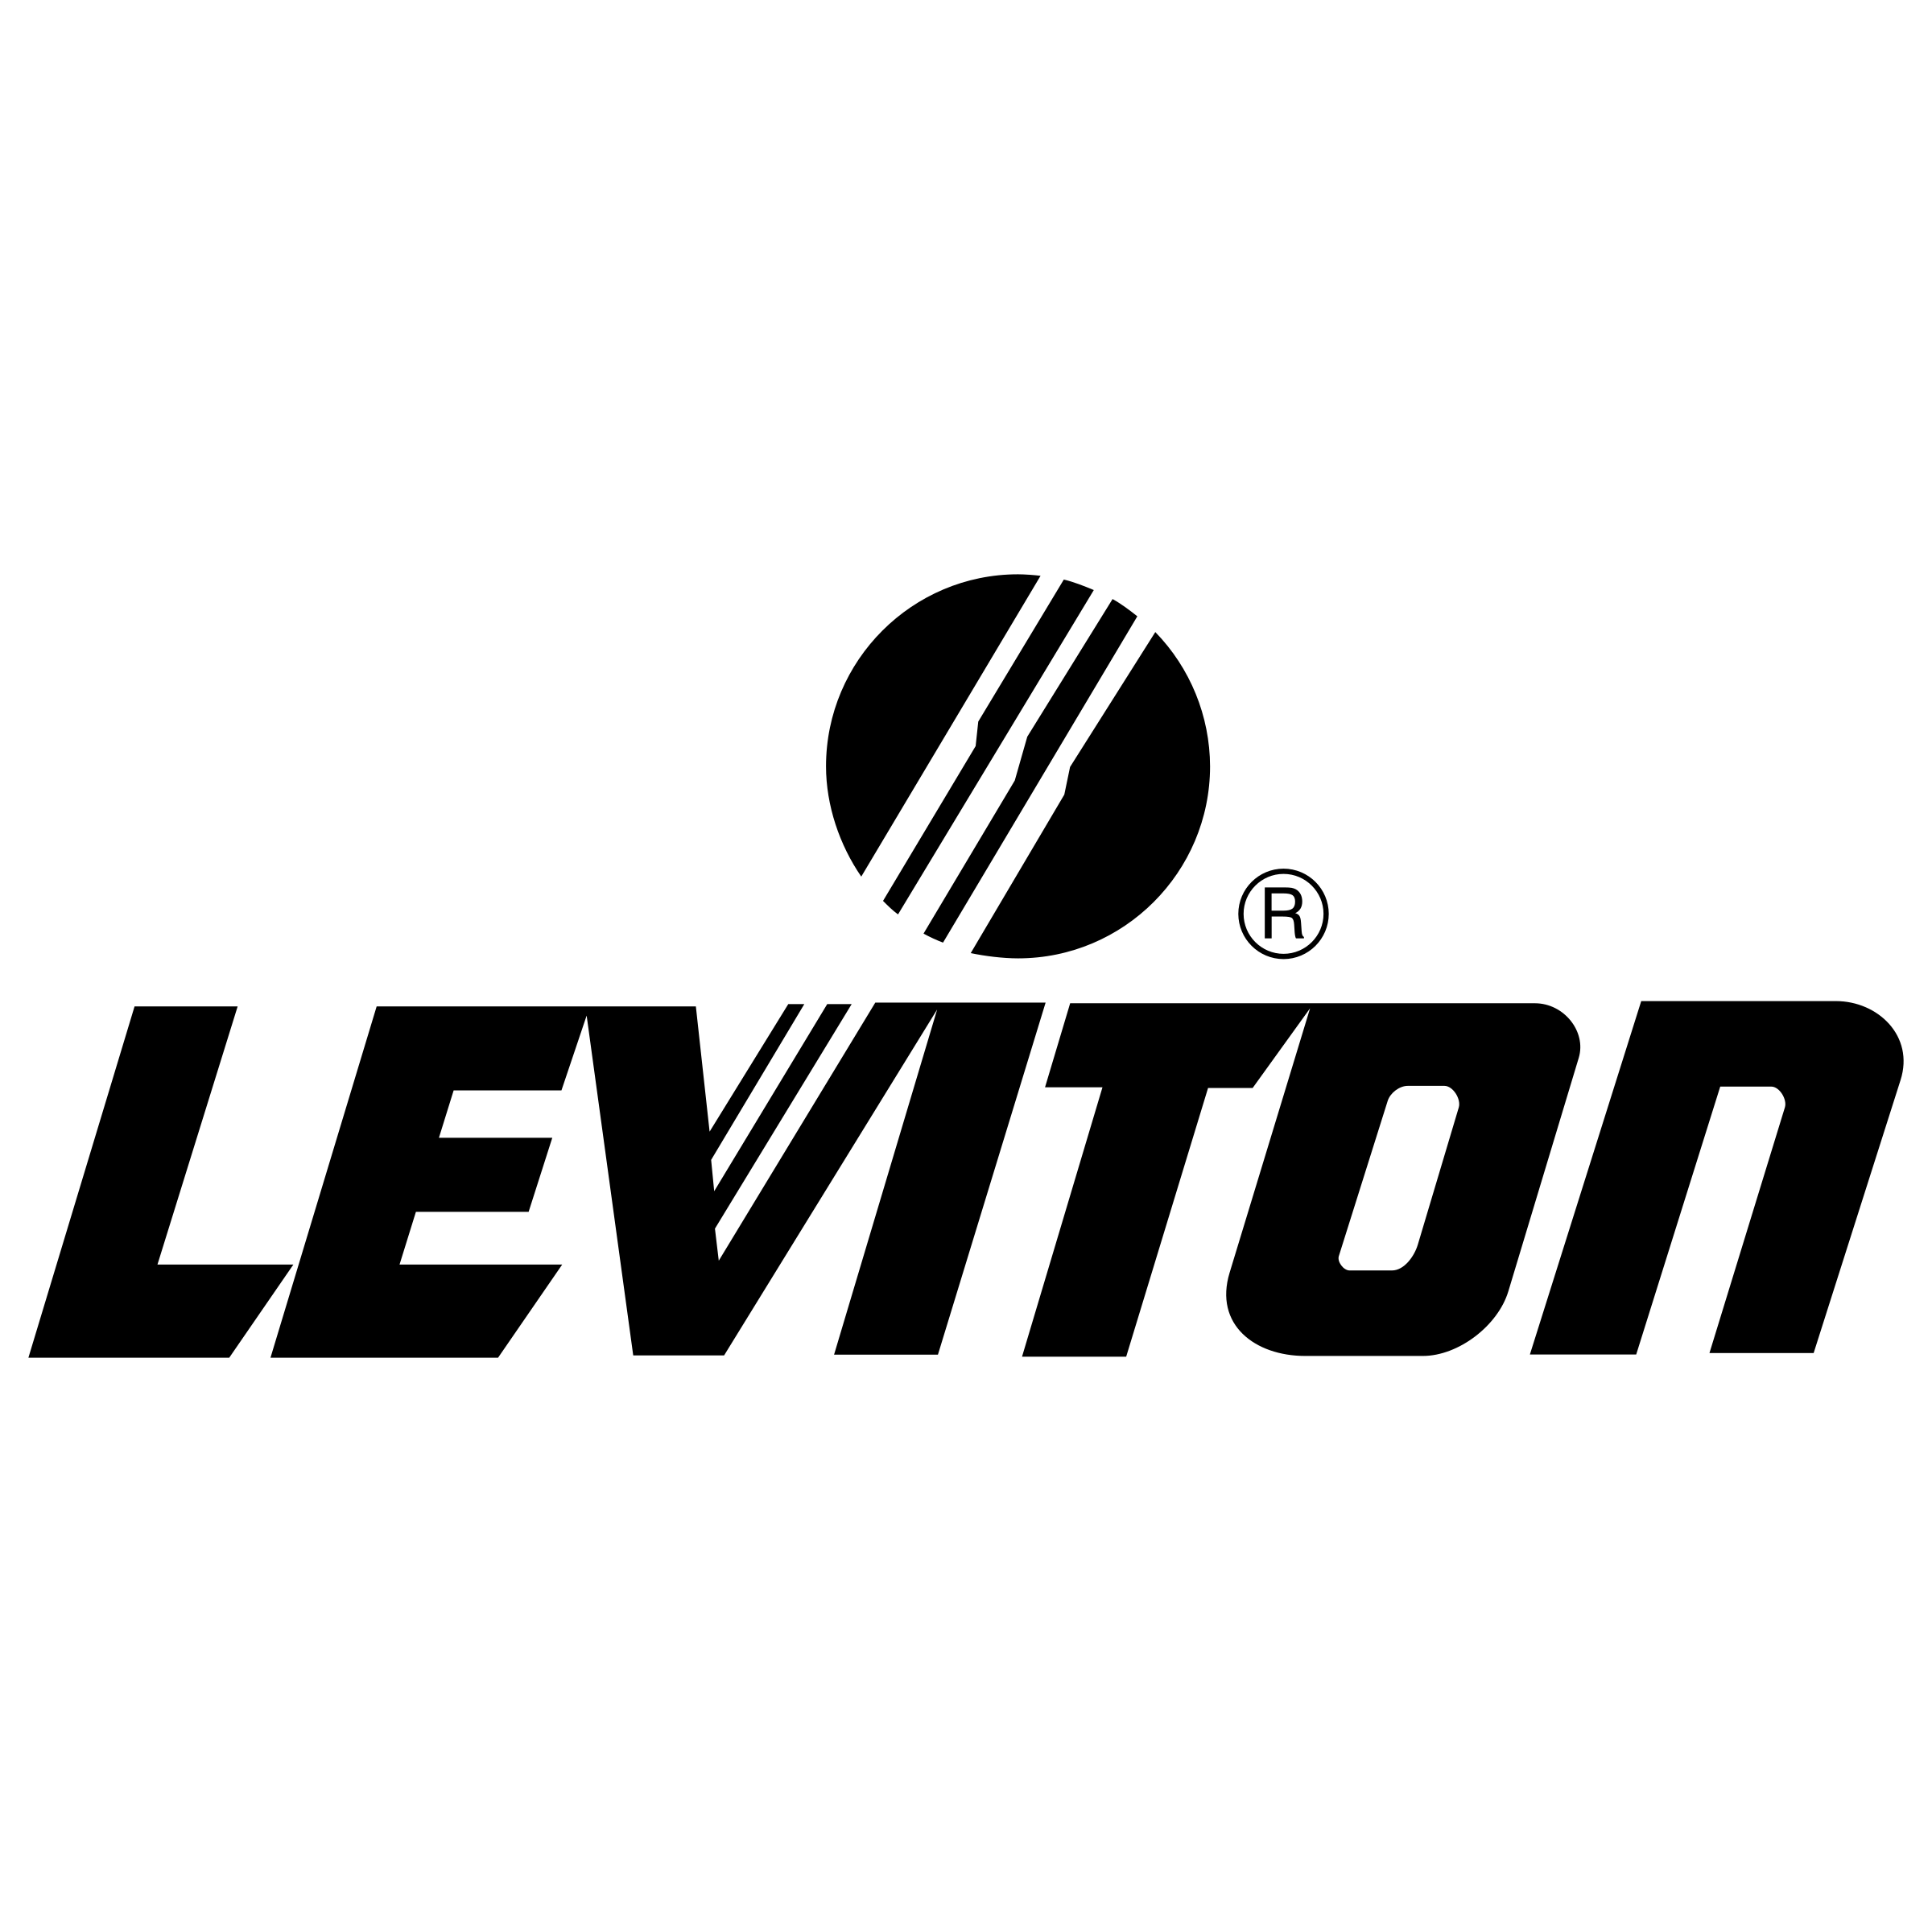 Leviton Logo - Leviton Logo PNG Transparent & SVG Vector